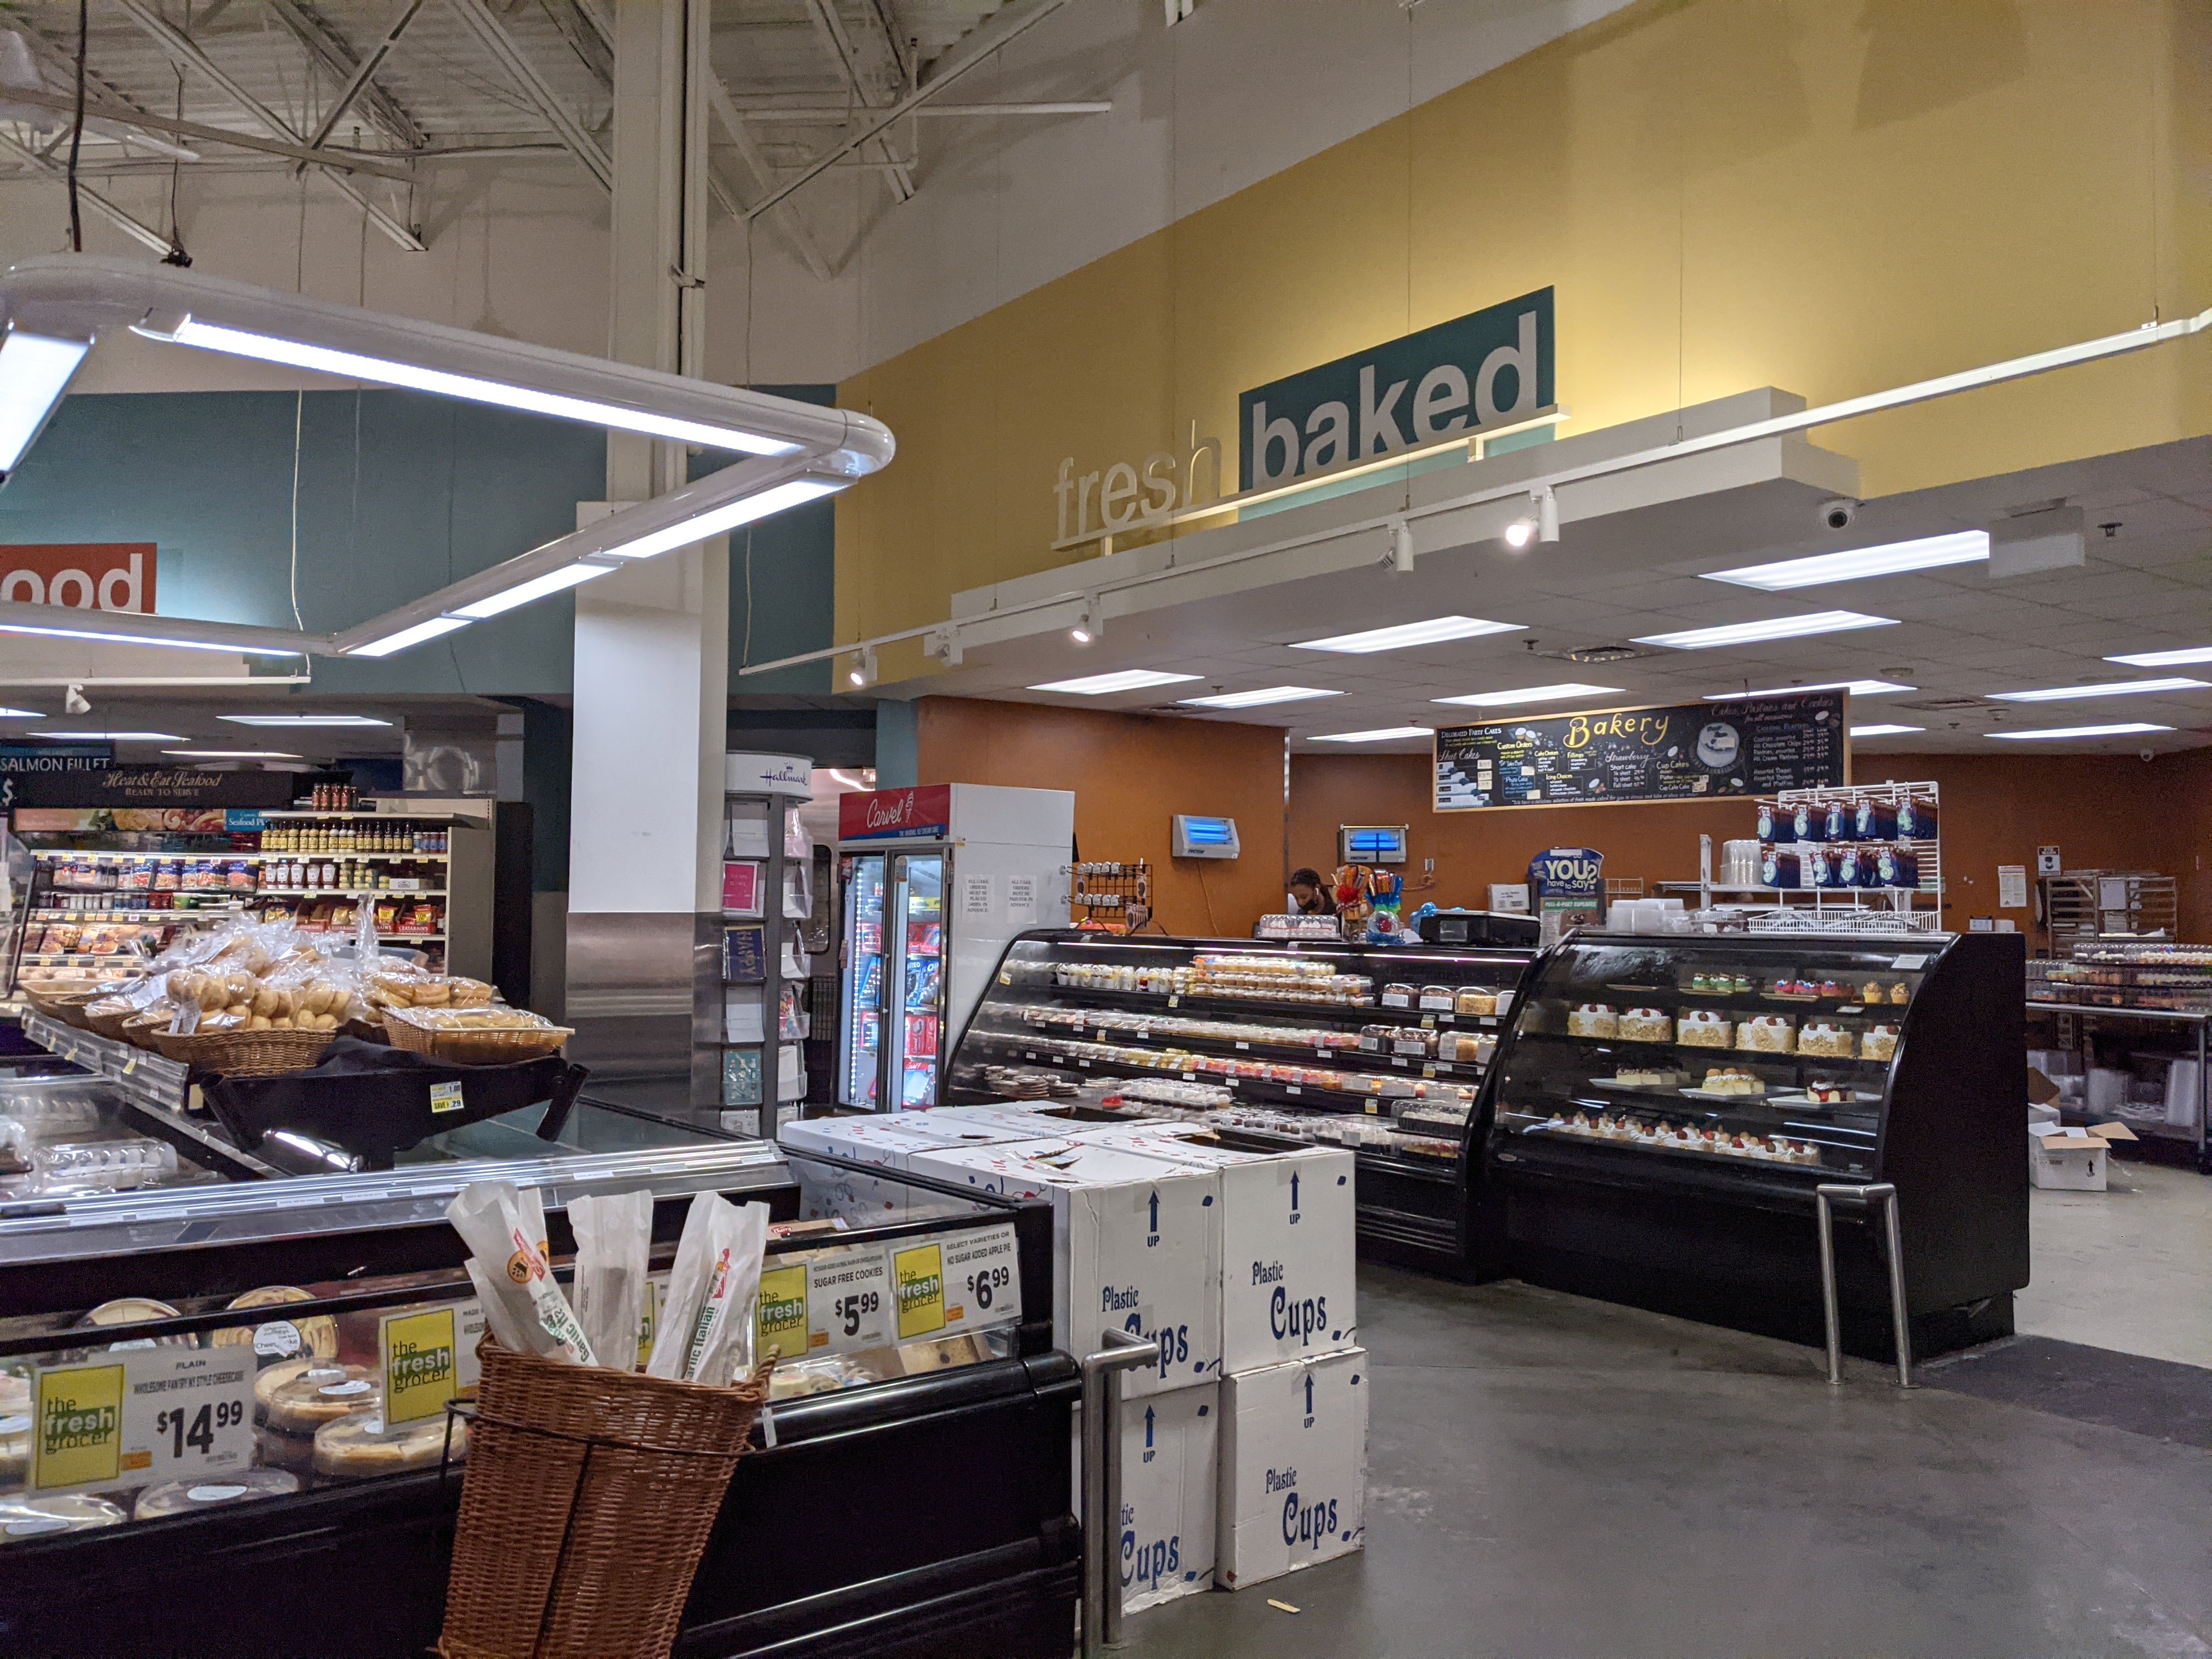 Eighth  Fresh supermarket set to open its doors